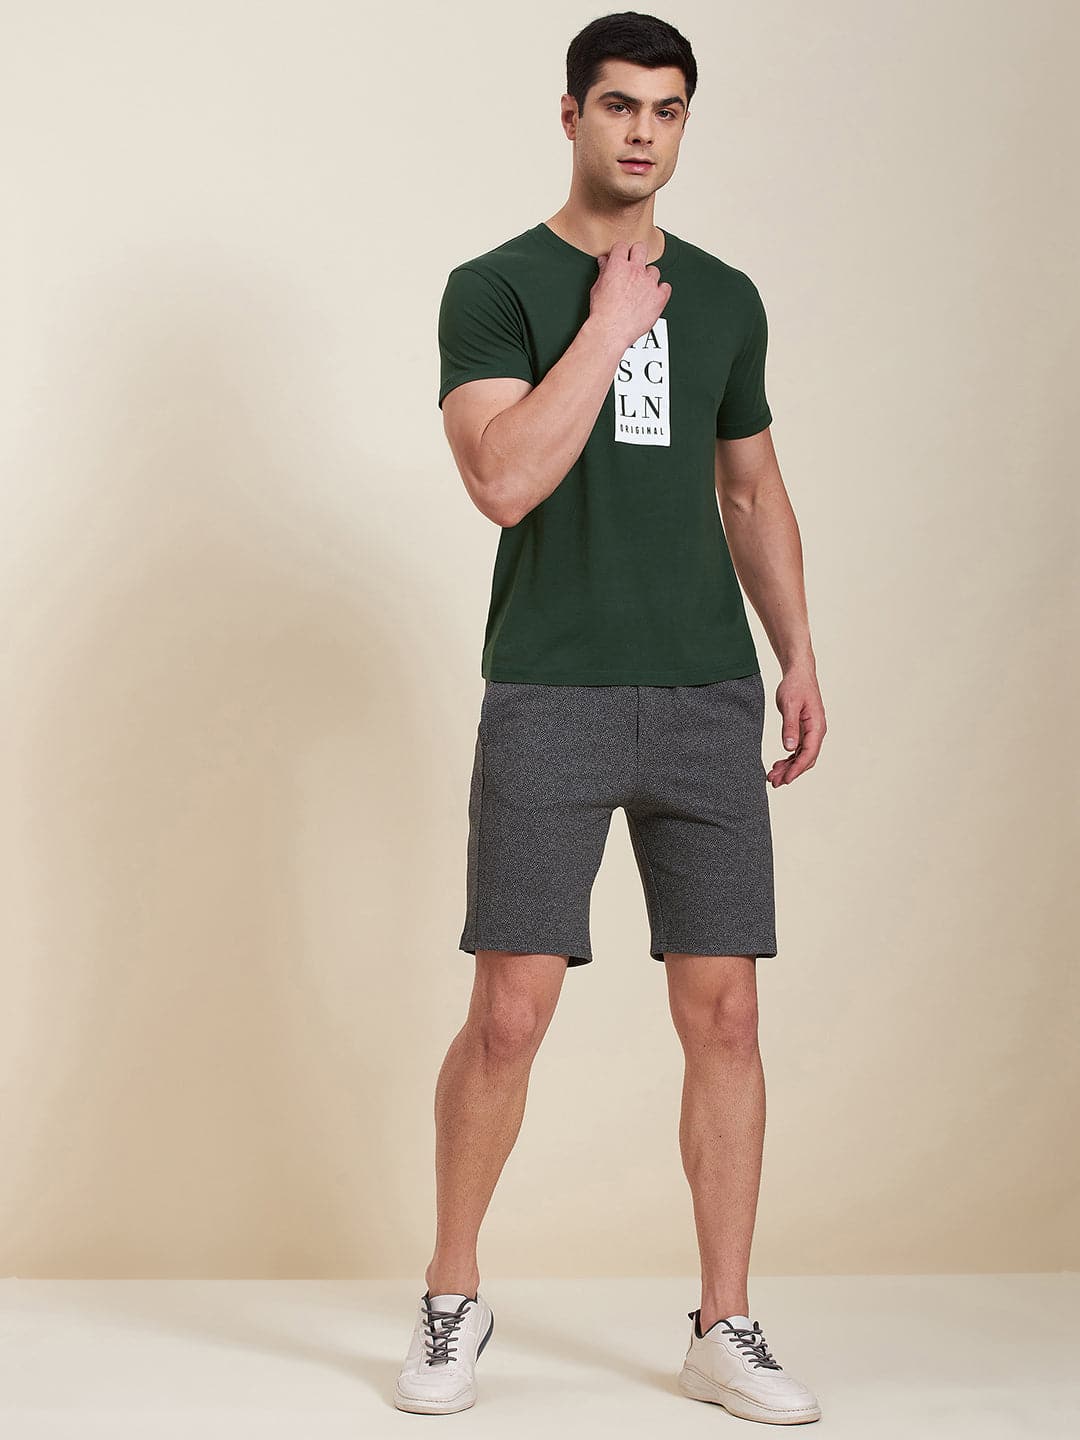 Men's Olive Vertical MASCLN Slim Fit T-Shirt - LYUSH-MASCLN